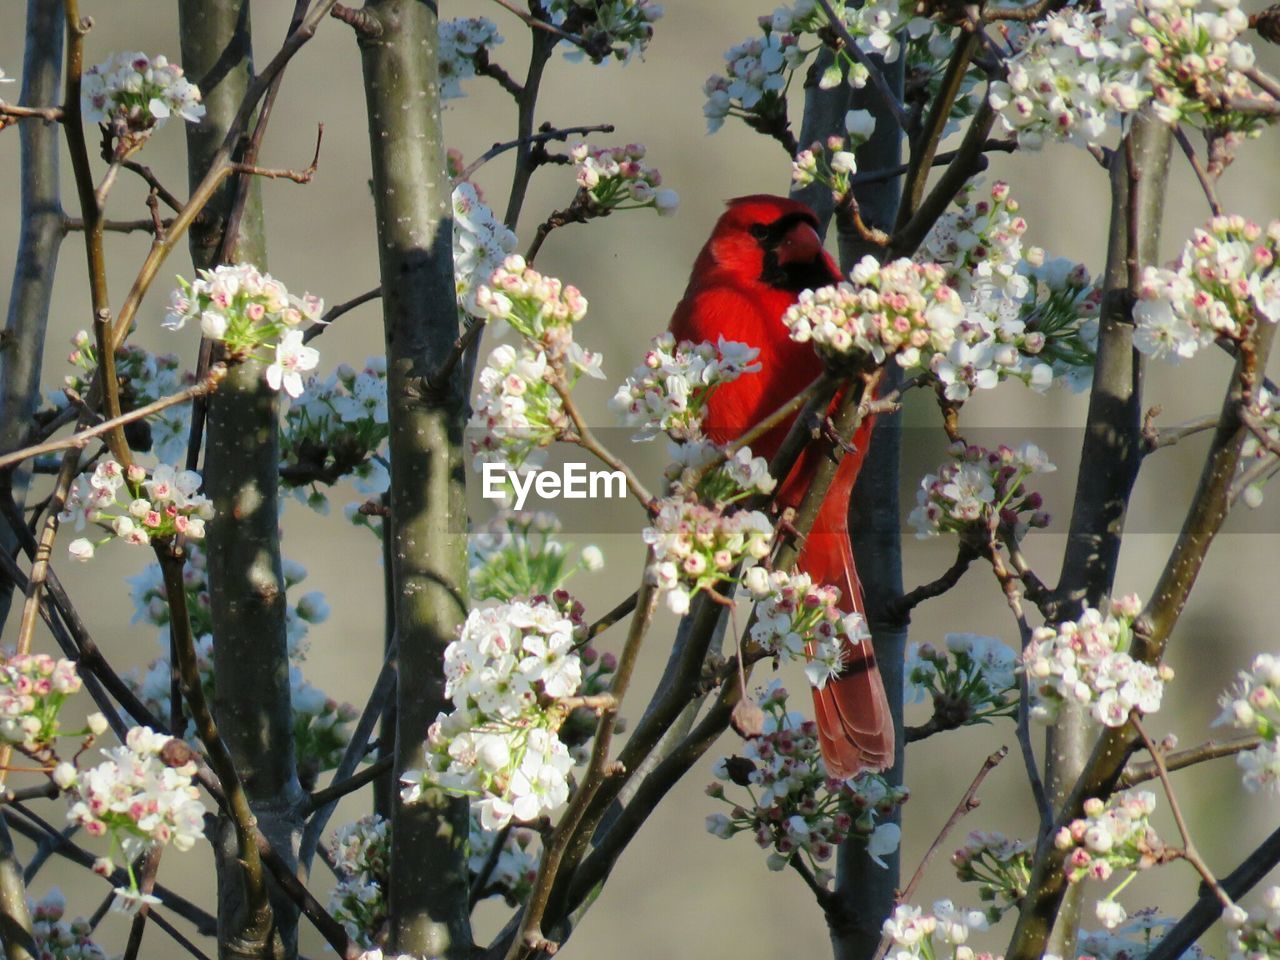 Cardinal perching on flowering tree